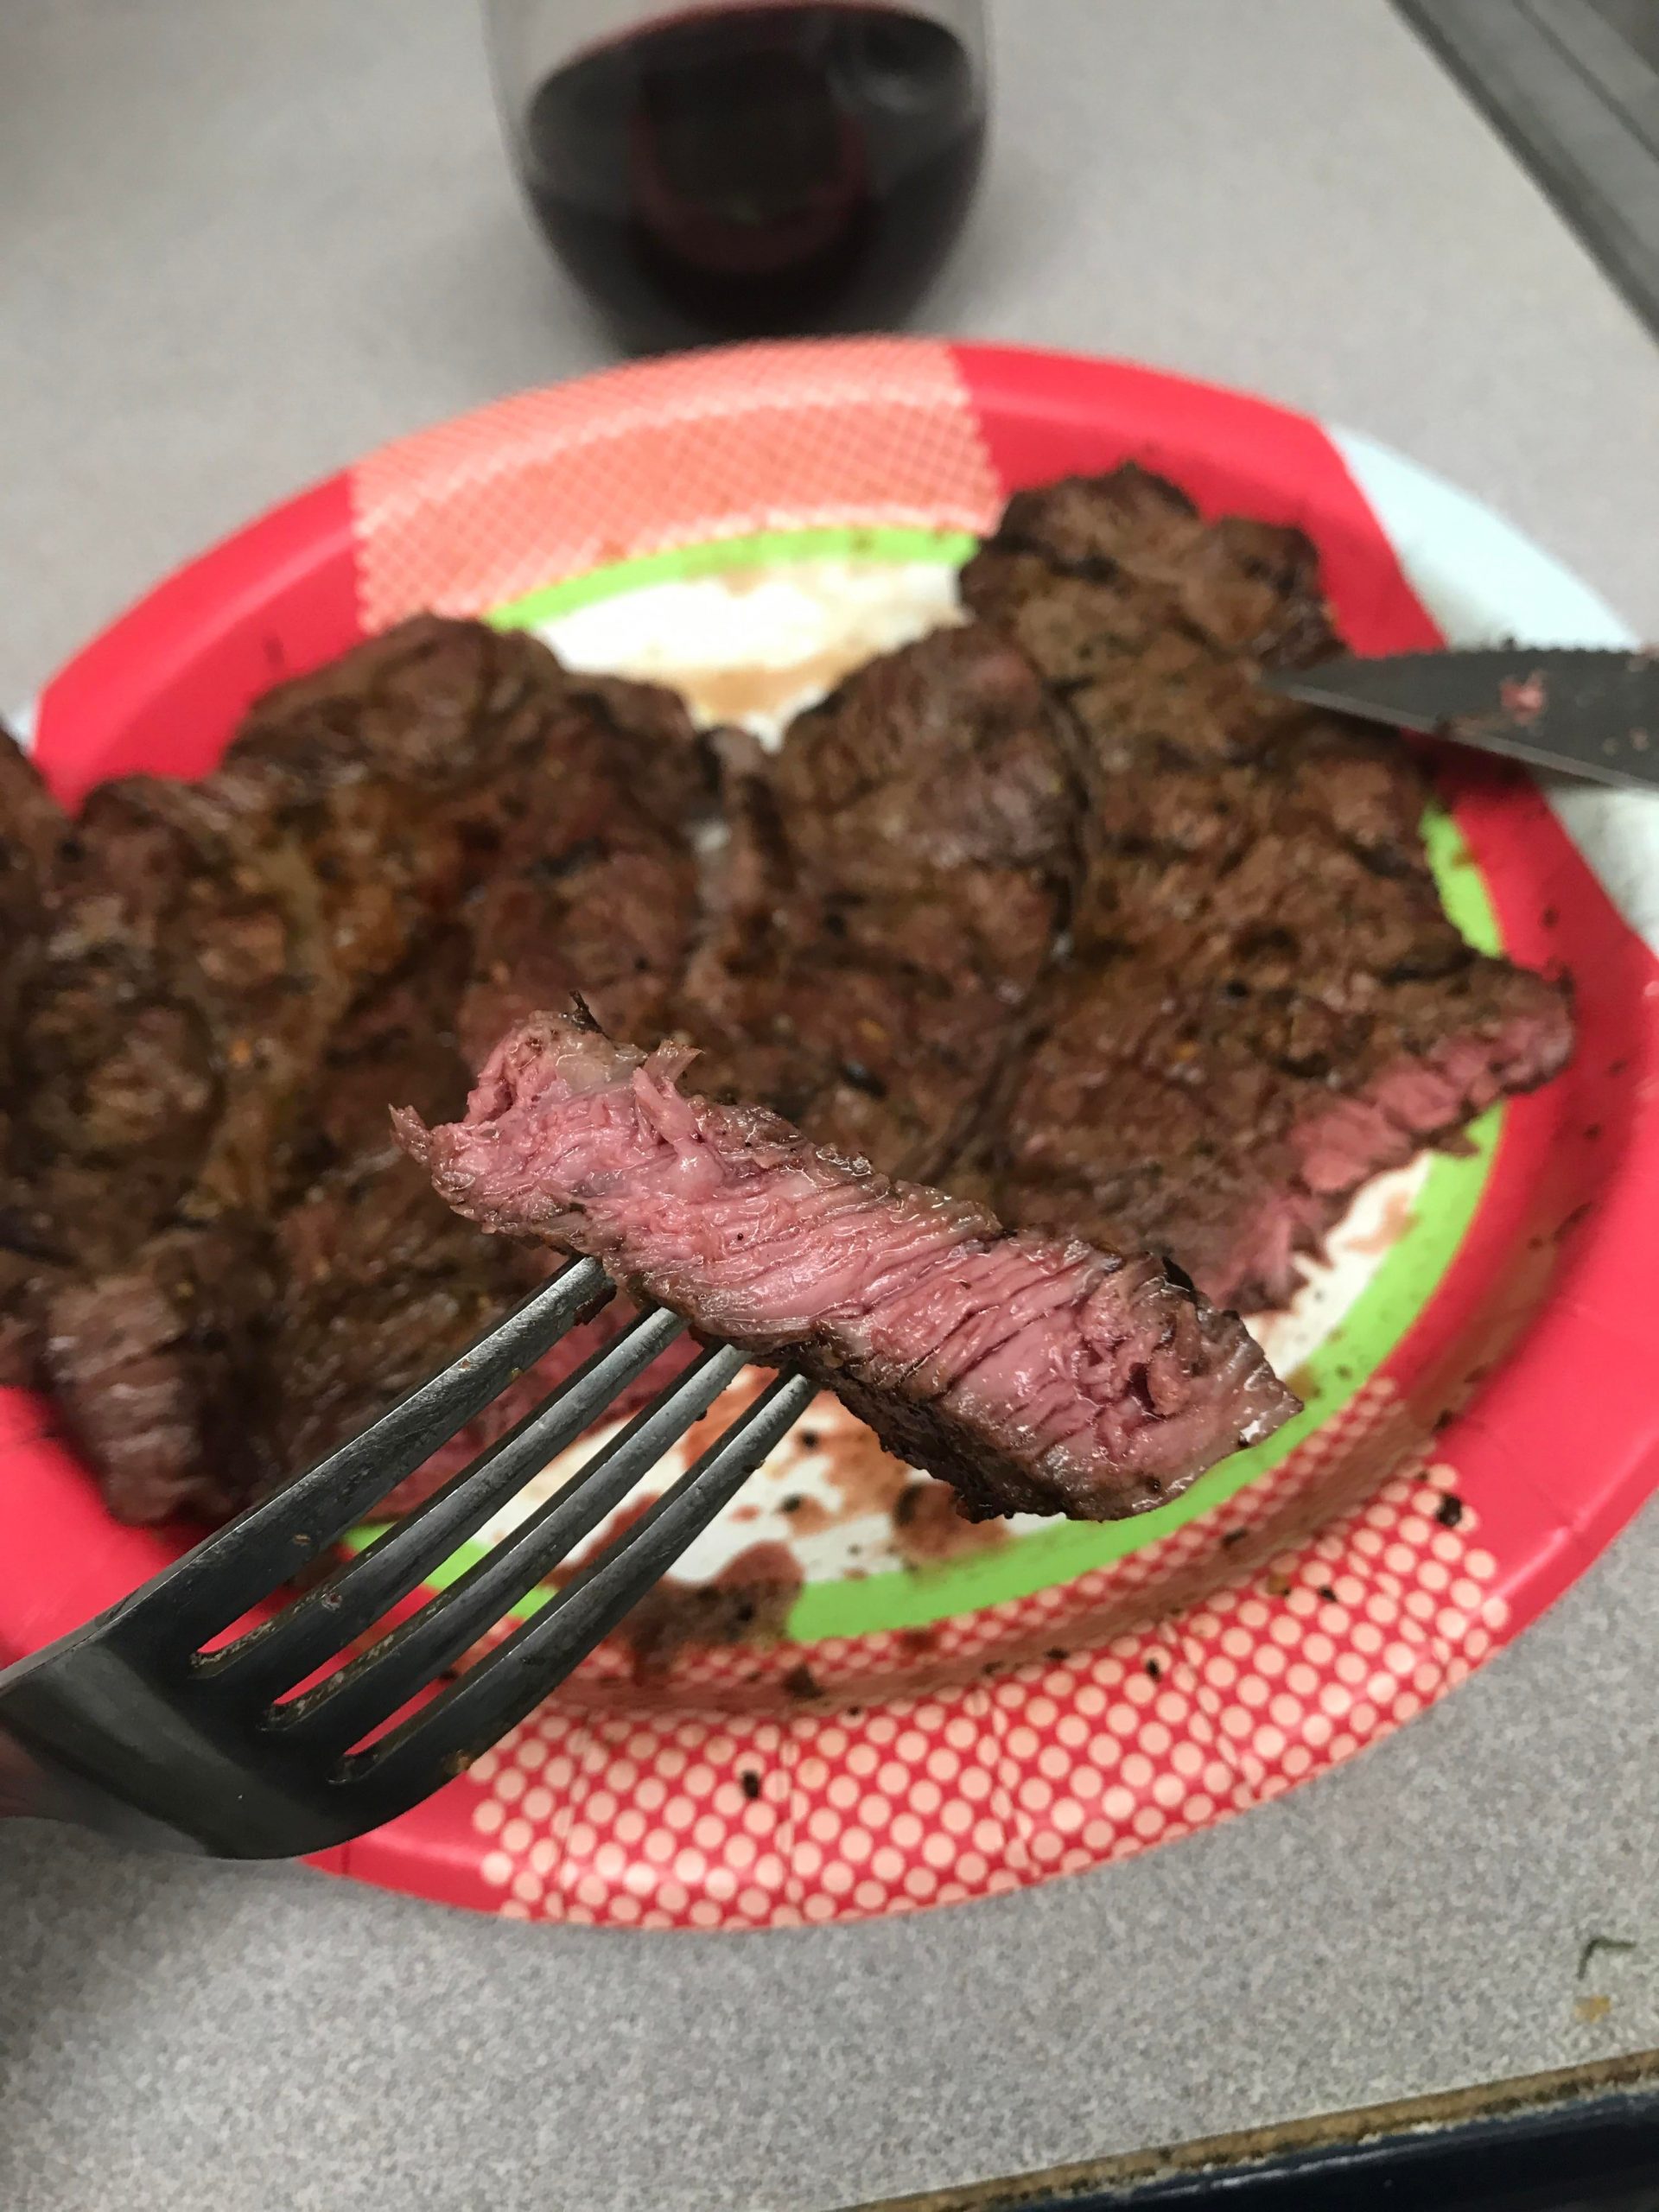 Cheap chuck steaks on the grill : steak